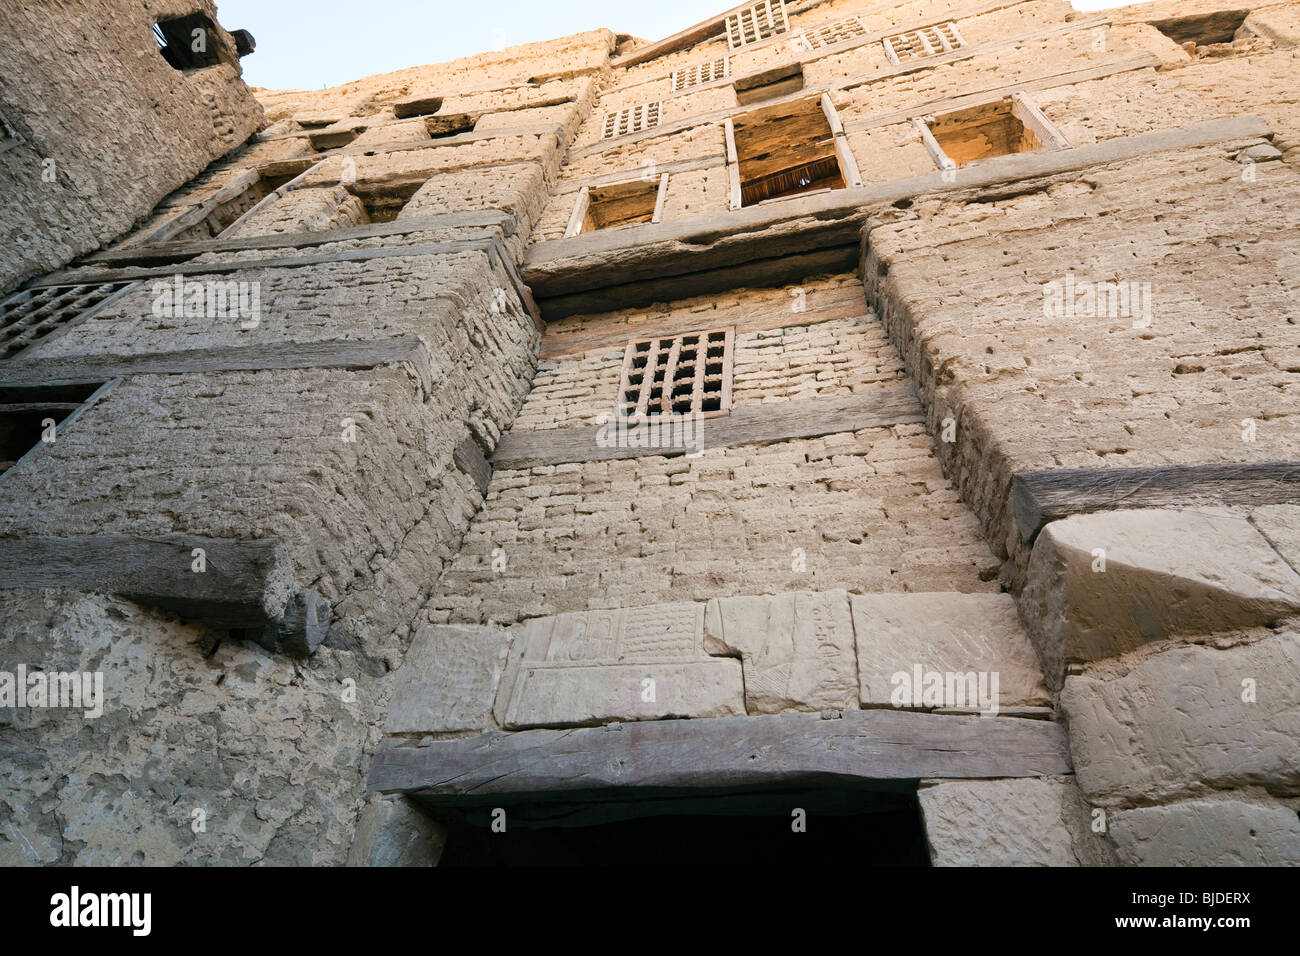 entrance and upper walls of houses, al Qasr oasis, Western desert, Egypt Stock Photo